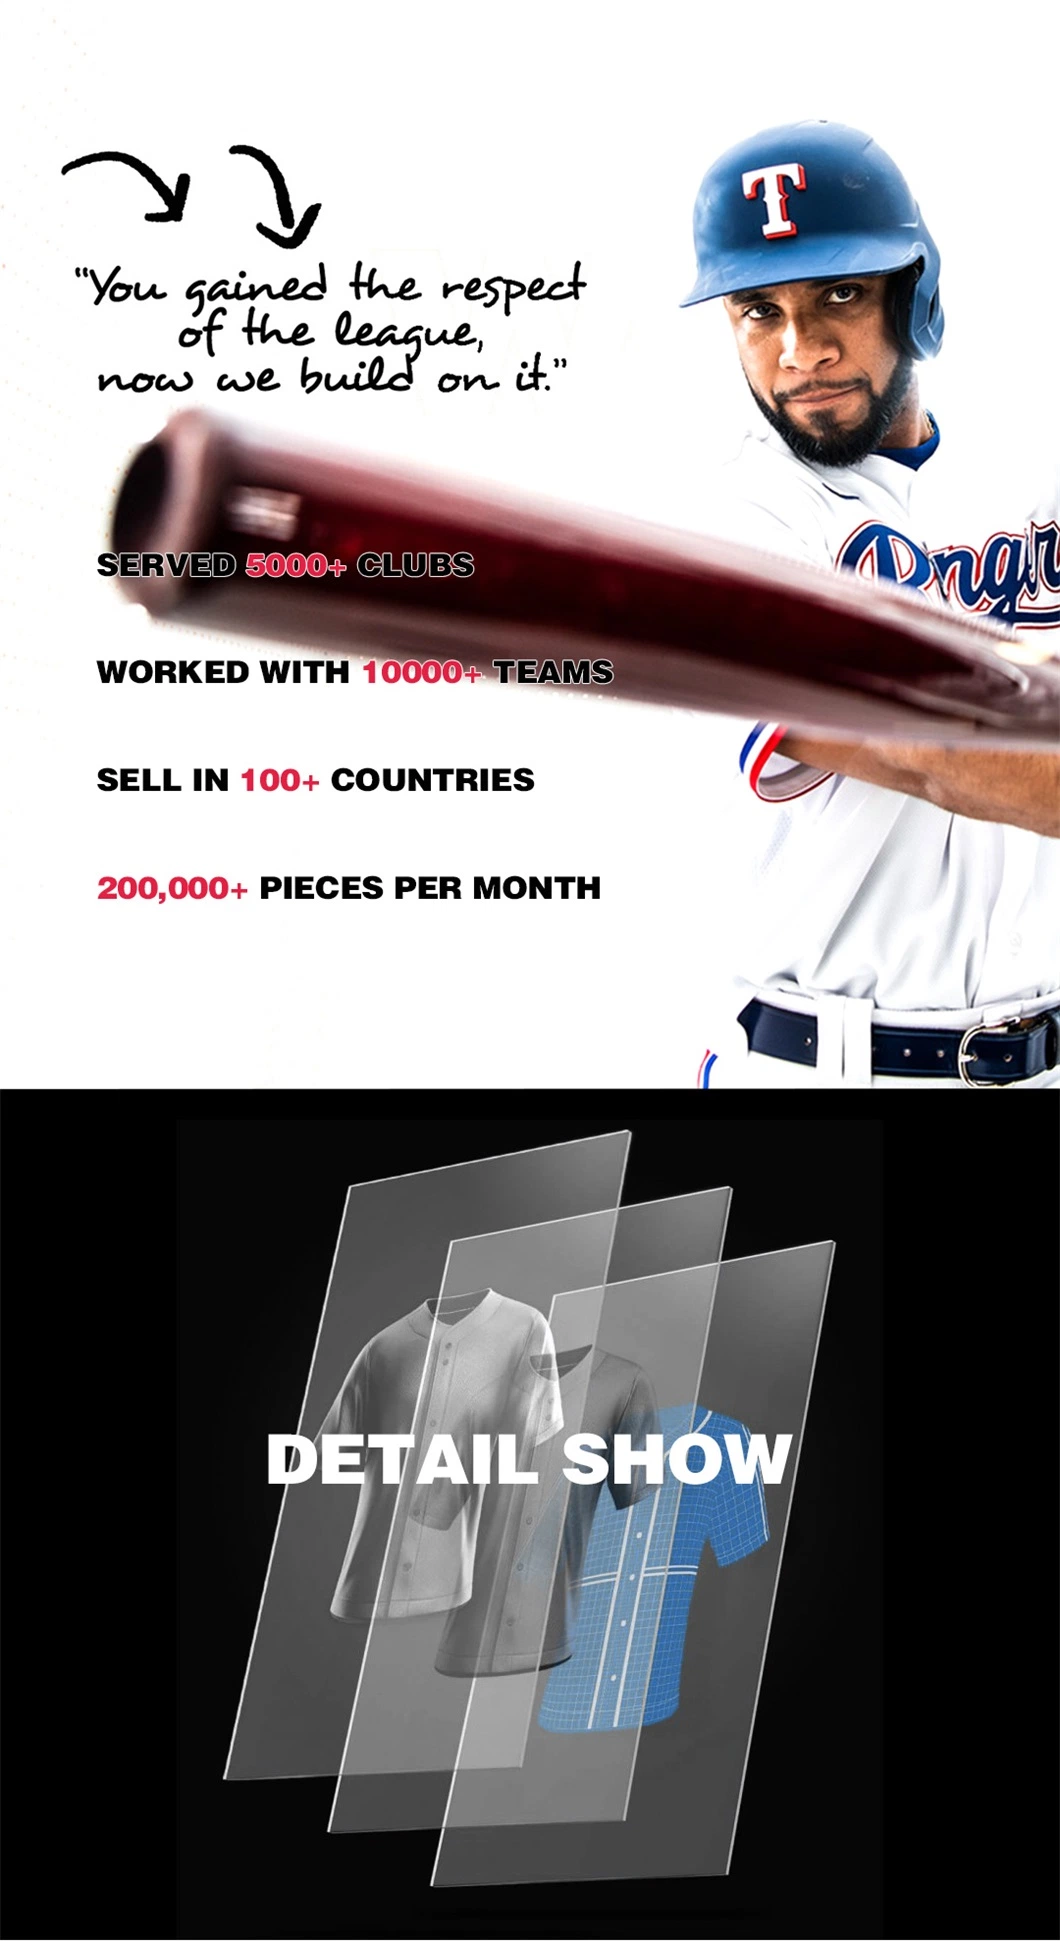 Wholesale High Quality OEM Baseball & Softball Wear for Club